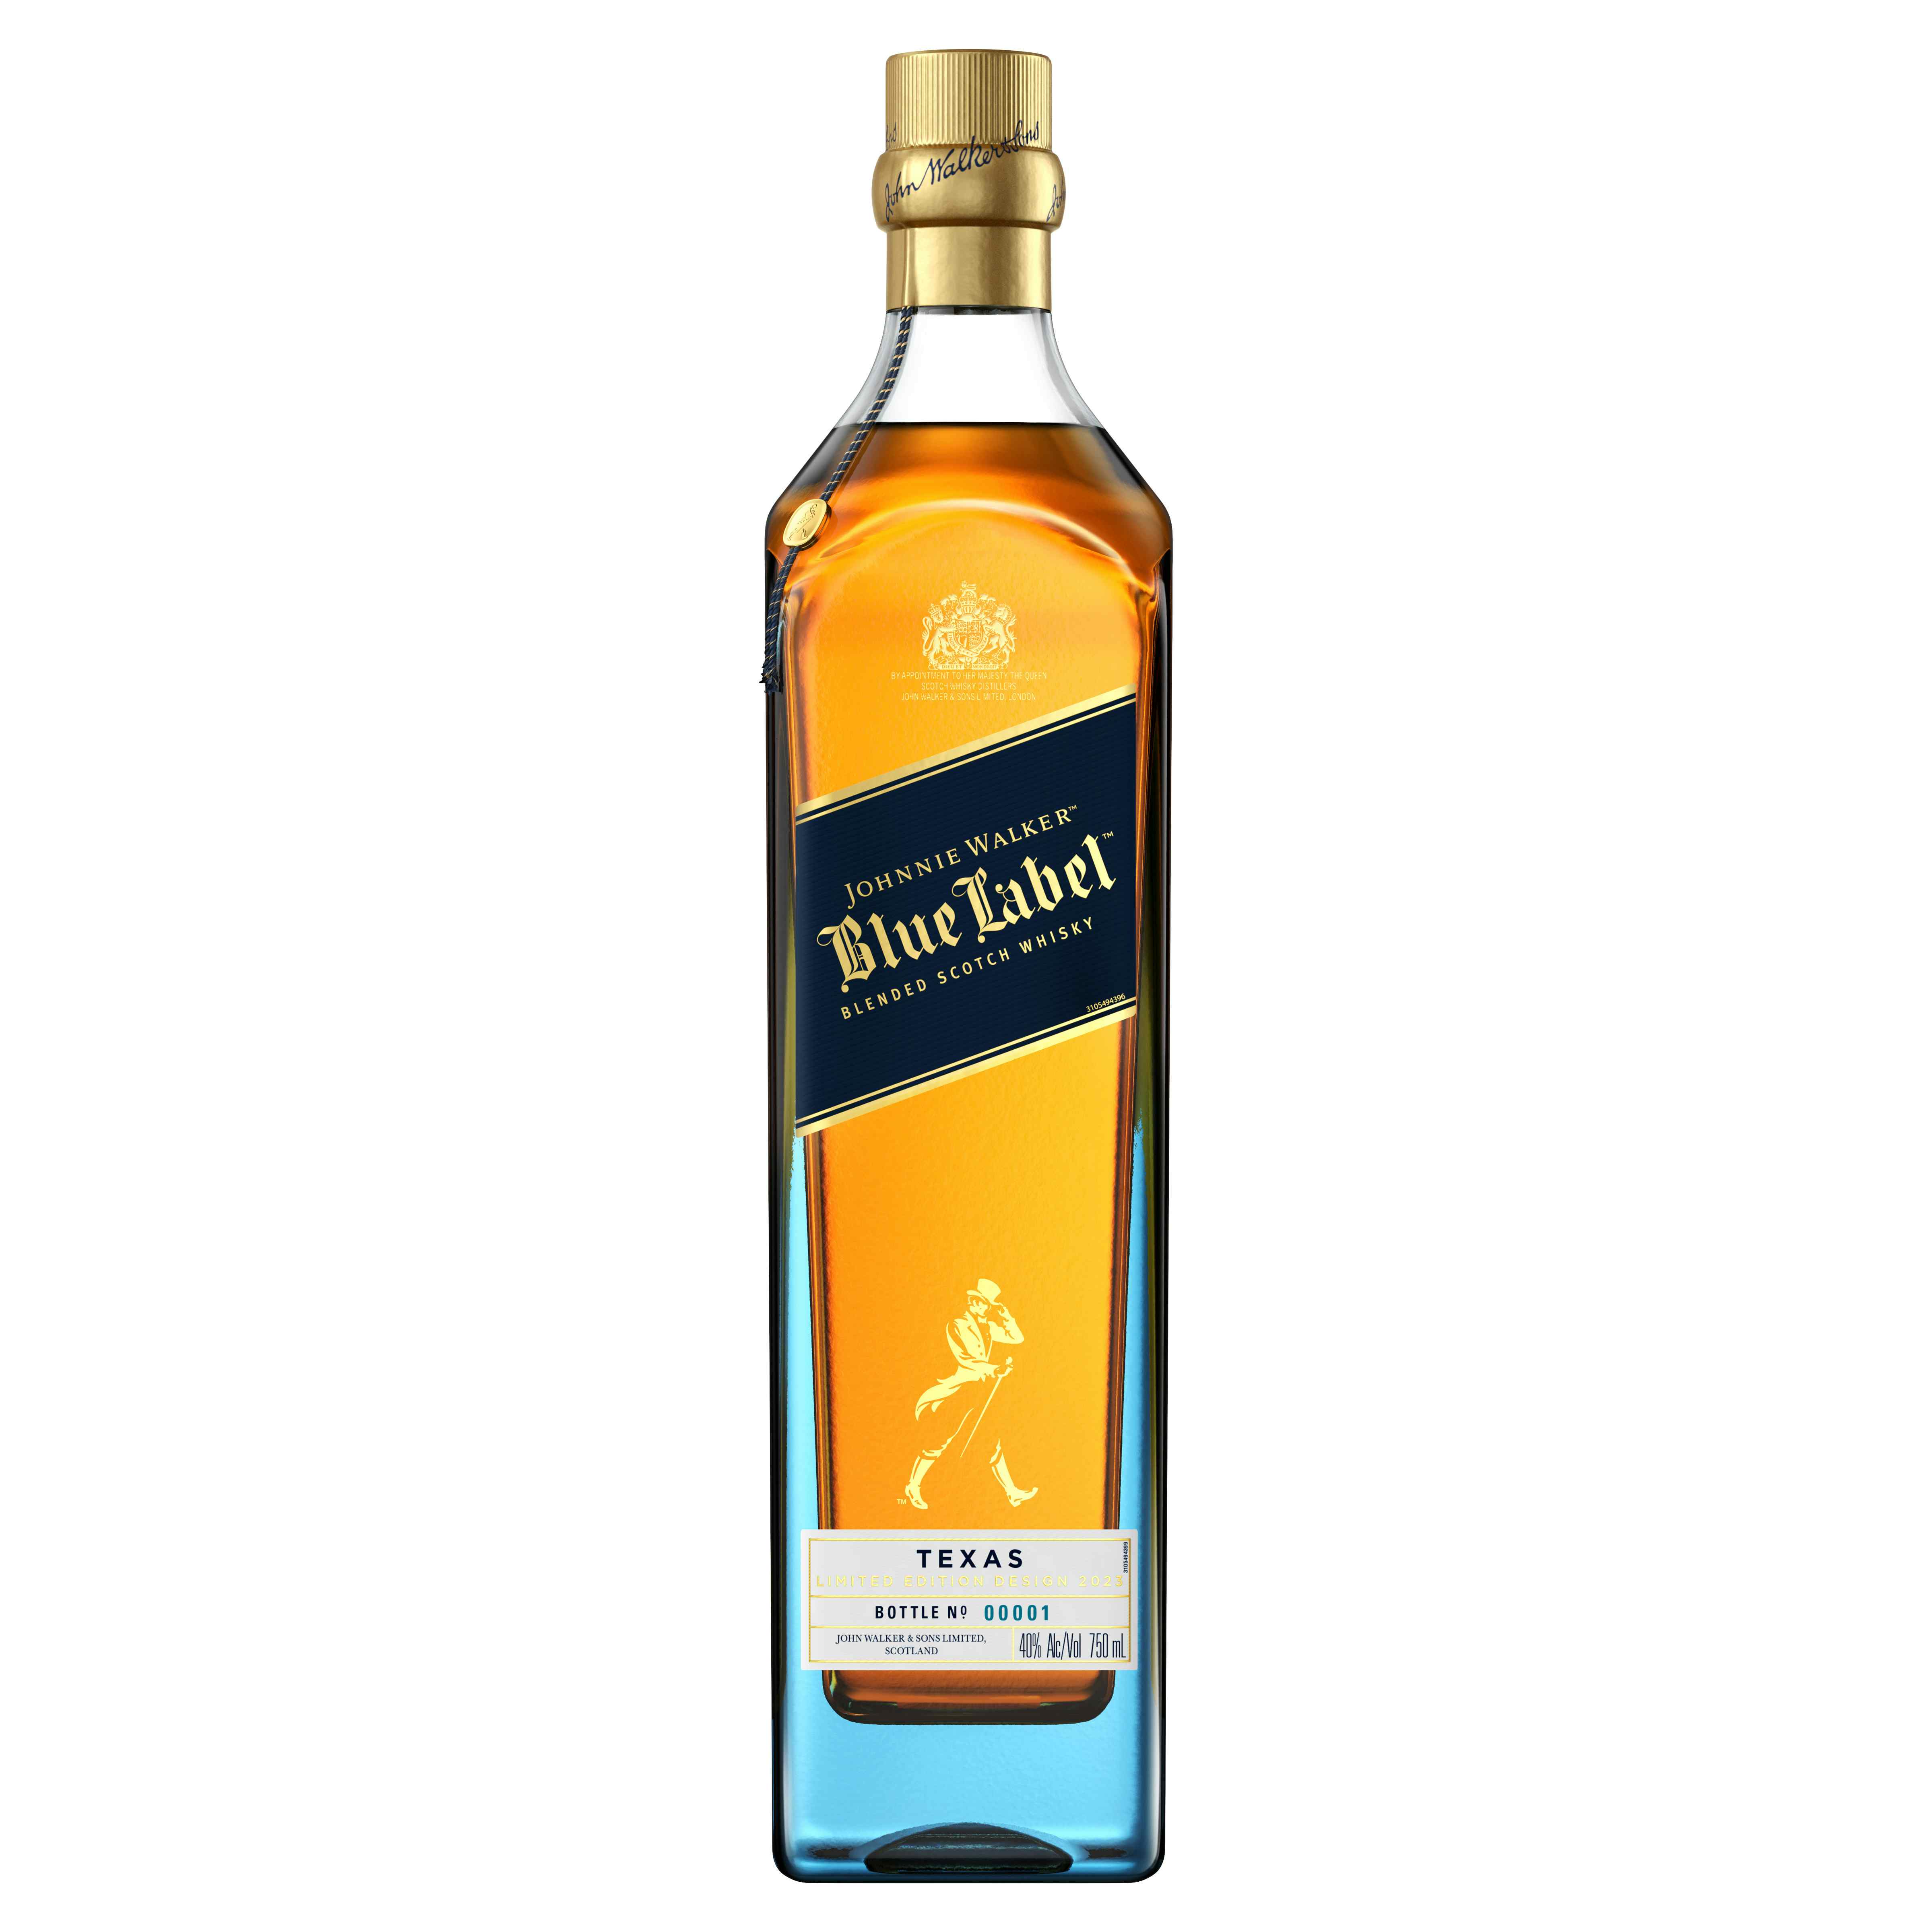 Johnnie Walker Blue Label Blended Scotch Whisky, Texas